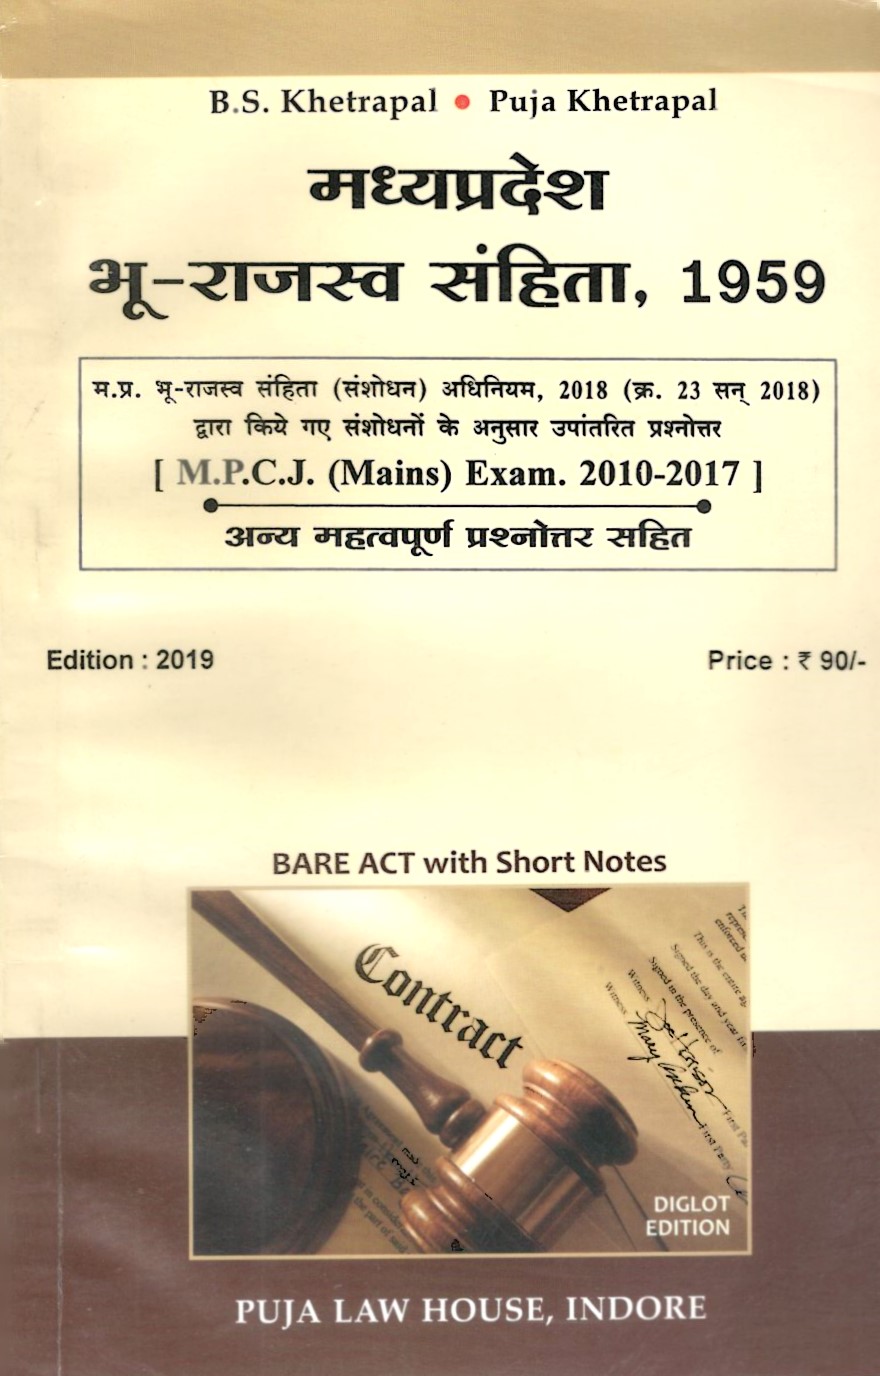 मध्य प्रदेश भू - राजस्व संहिता, 1959 / Madhya Pradesh Land Revenue code [M.P.C.J. (Mains) Exam. 2010-2017]